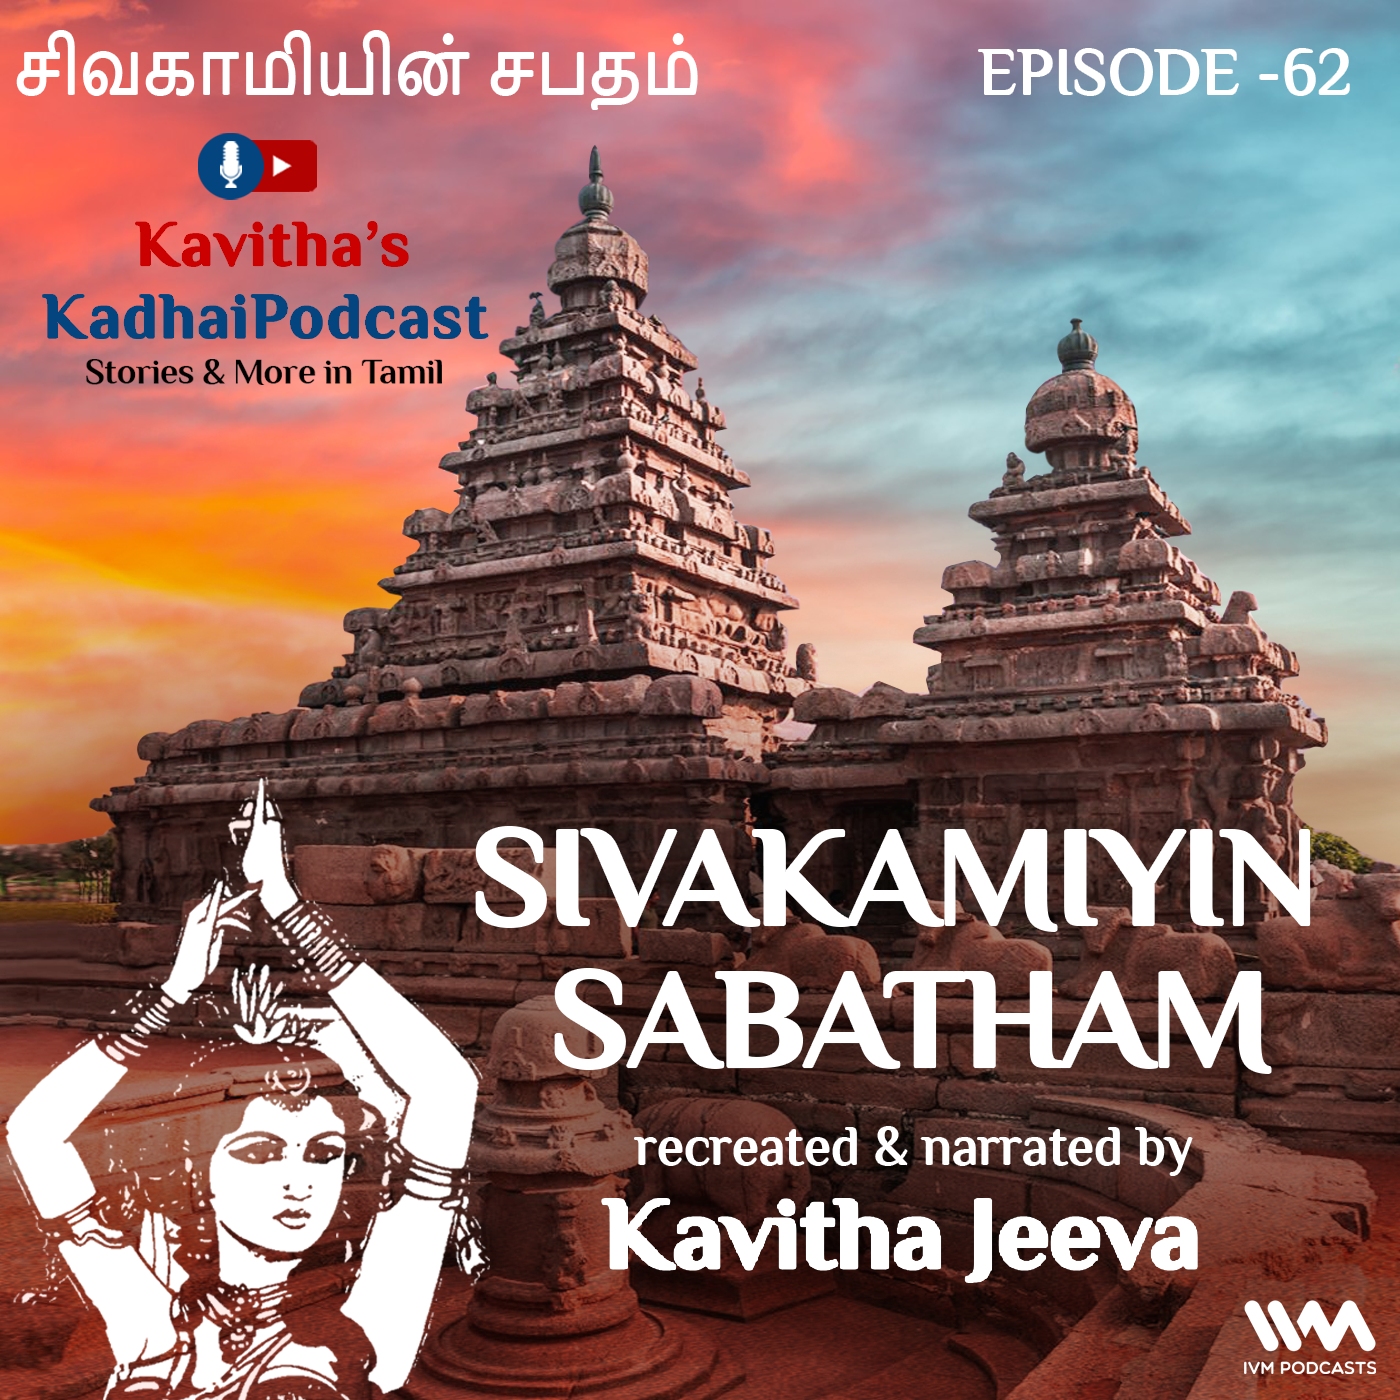 KadhaiPodcast's Sivakamiyin Sabatham - Episode # 62